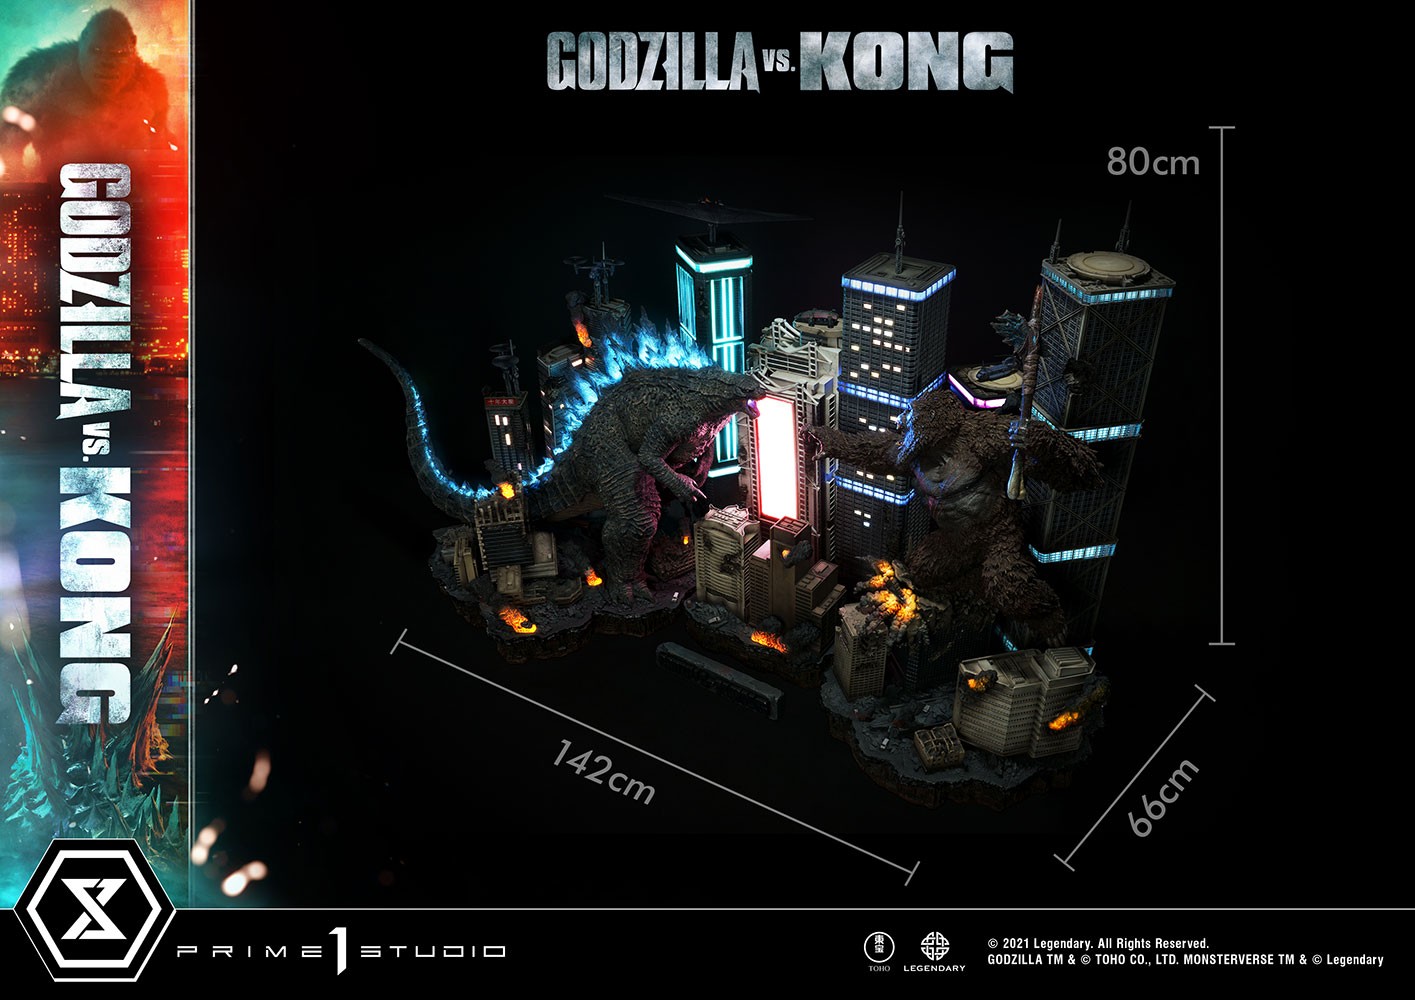 Godzilla vs Kong Final Battle (Prototype Shown) View 7